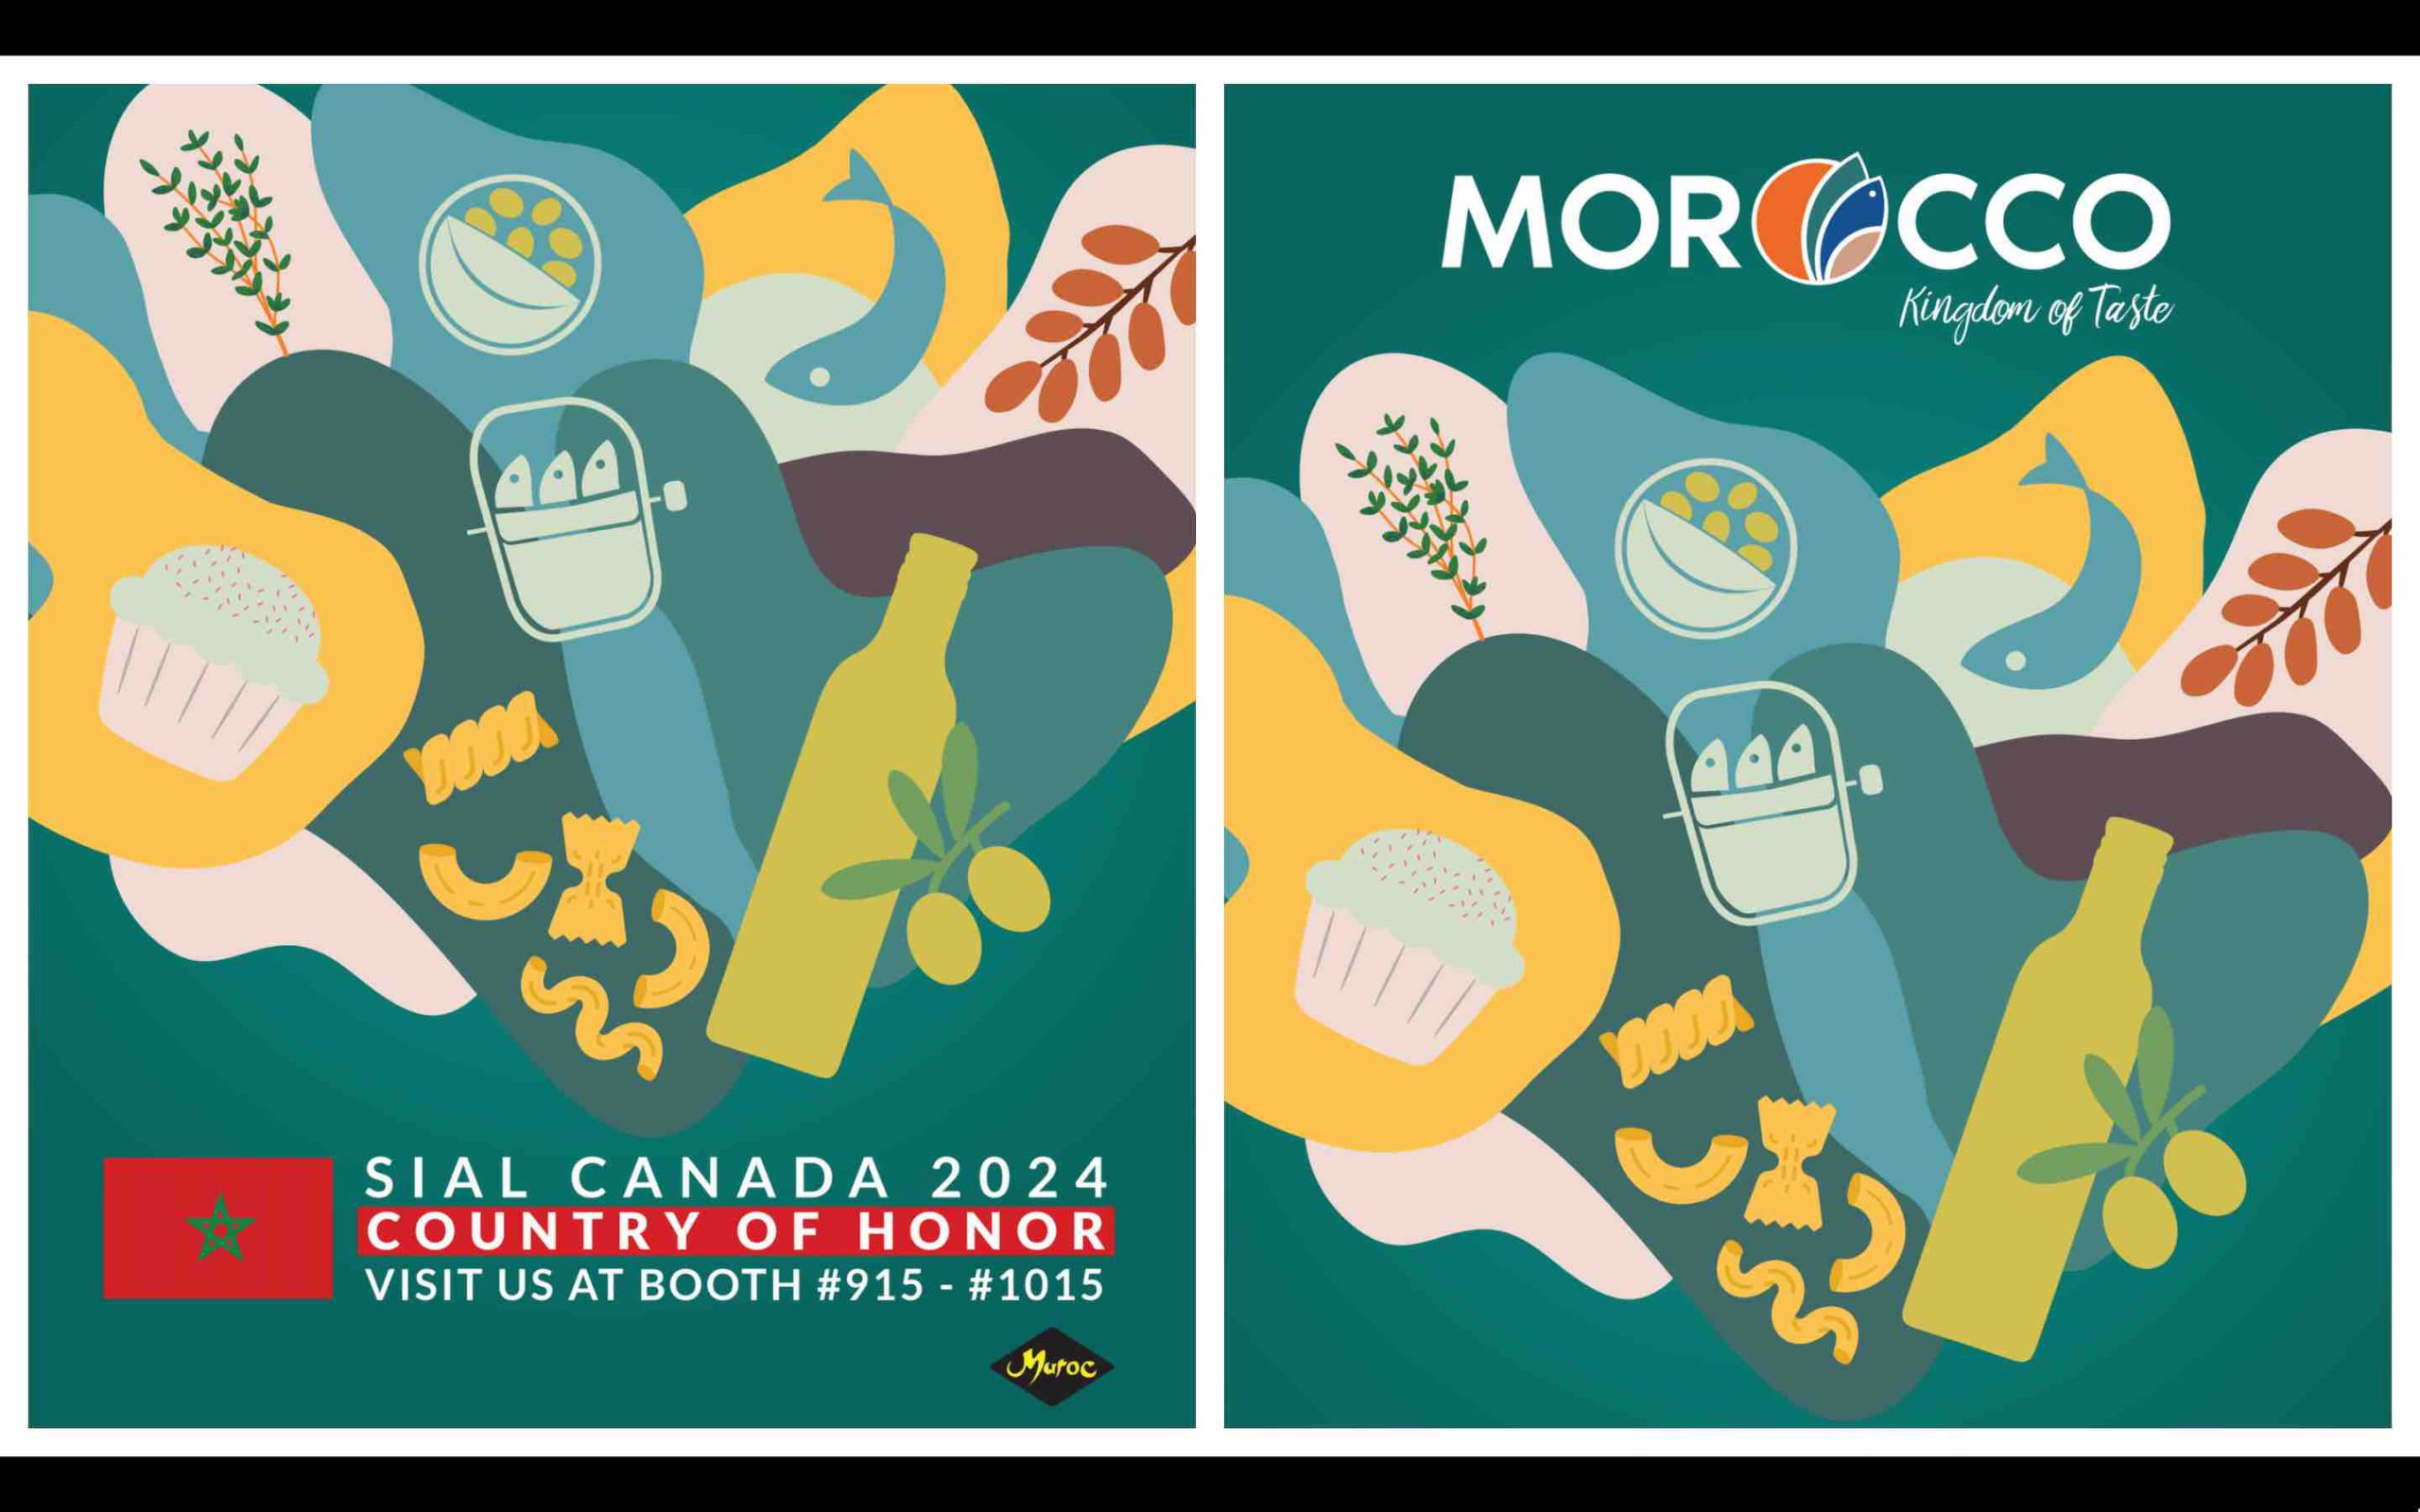 SIAL Canada 2024 Maroc pays d’honneur au Salon international de l’alimentation Morocco Country of Honor